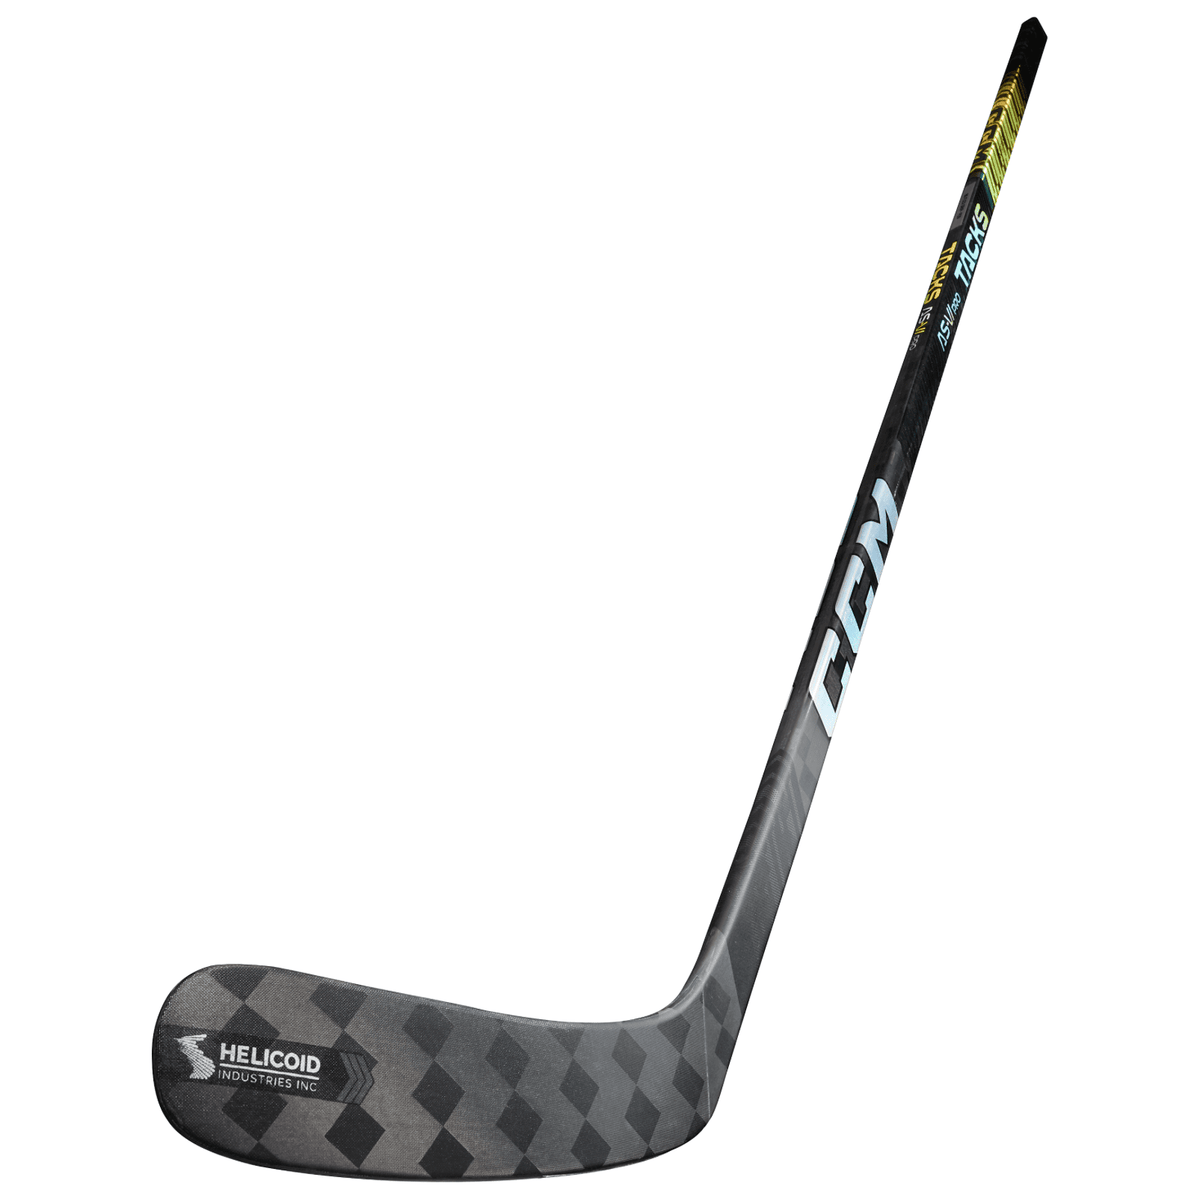 CCM Tacks AS6 Pro Ice Hockey Stick